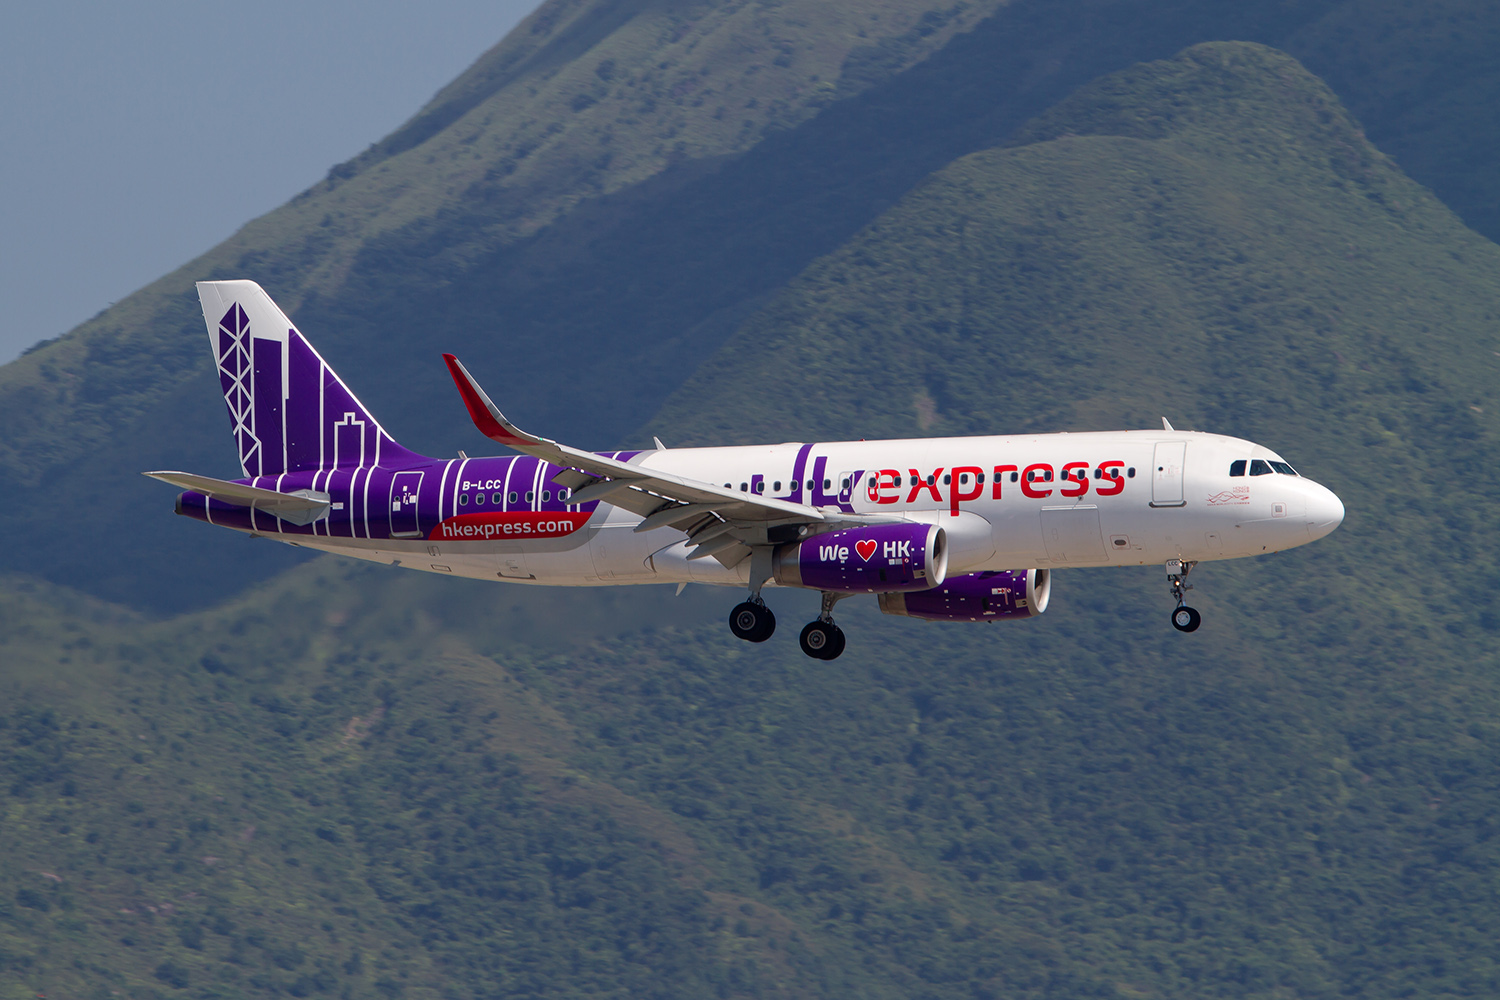 HK Express to start Hong Kong to Okinawa route